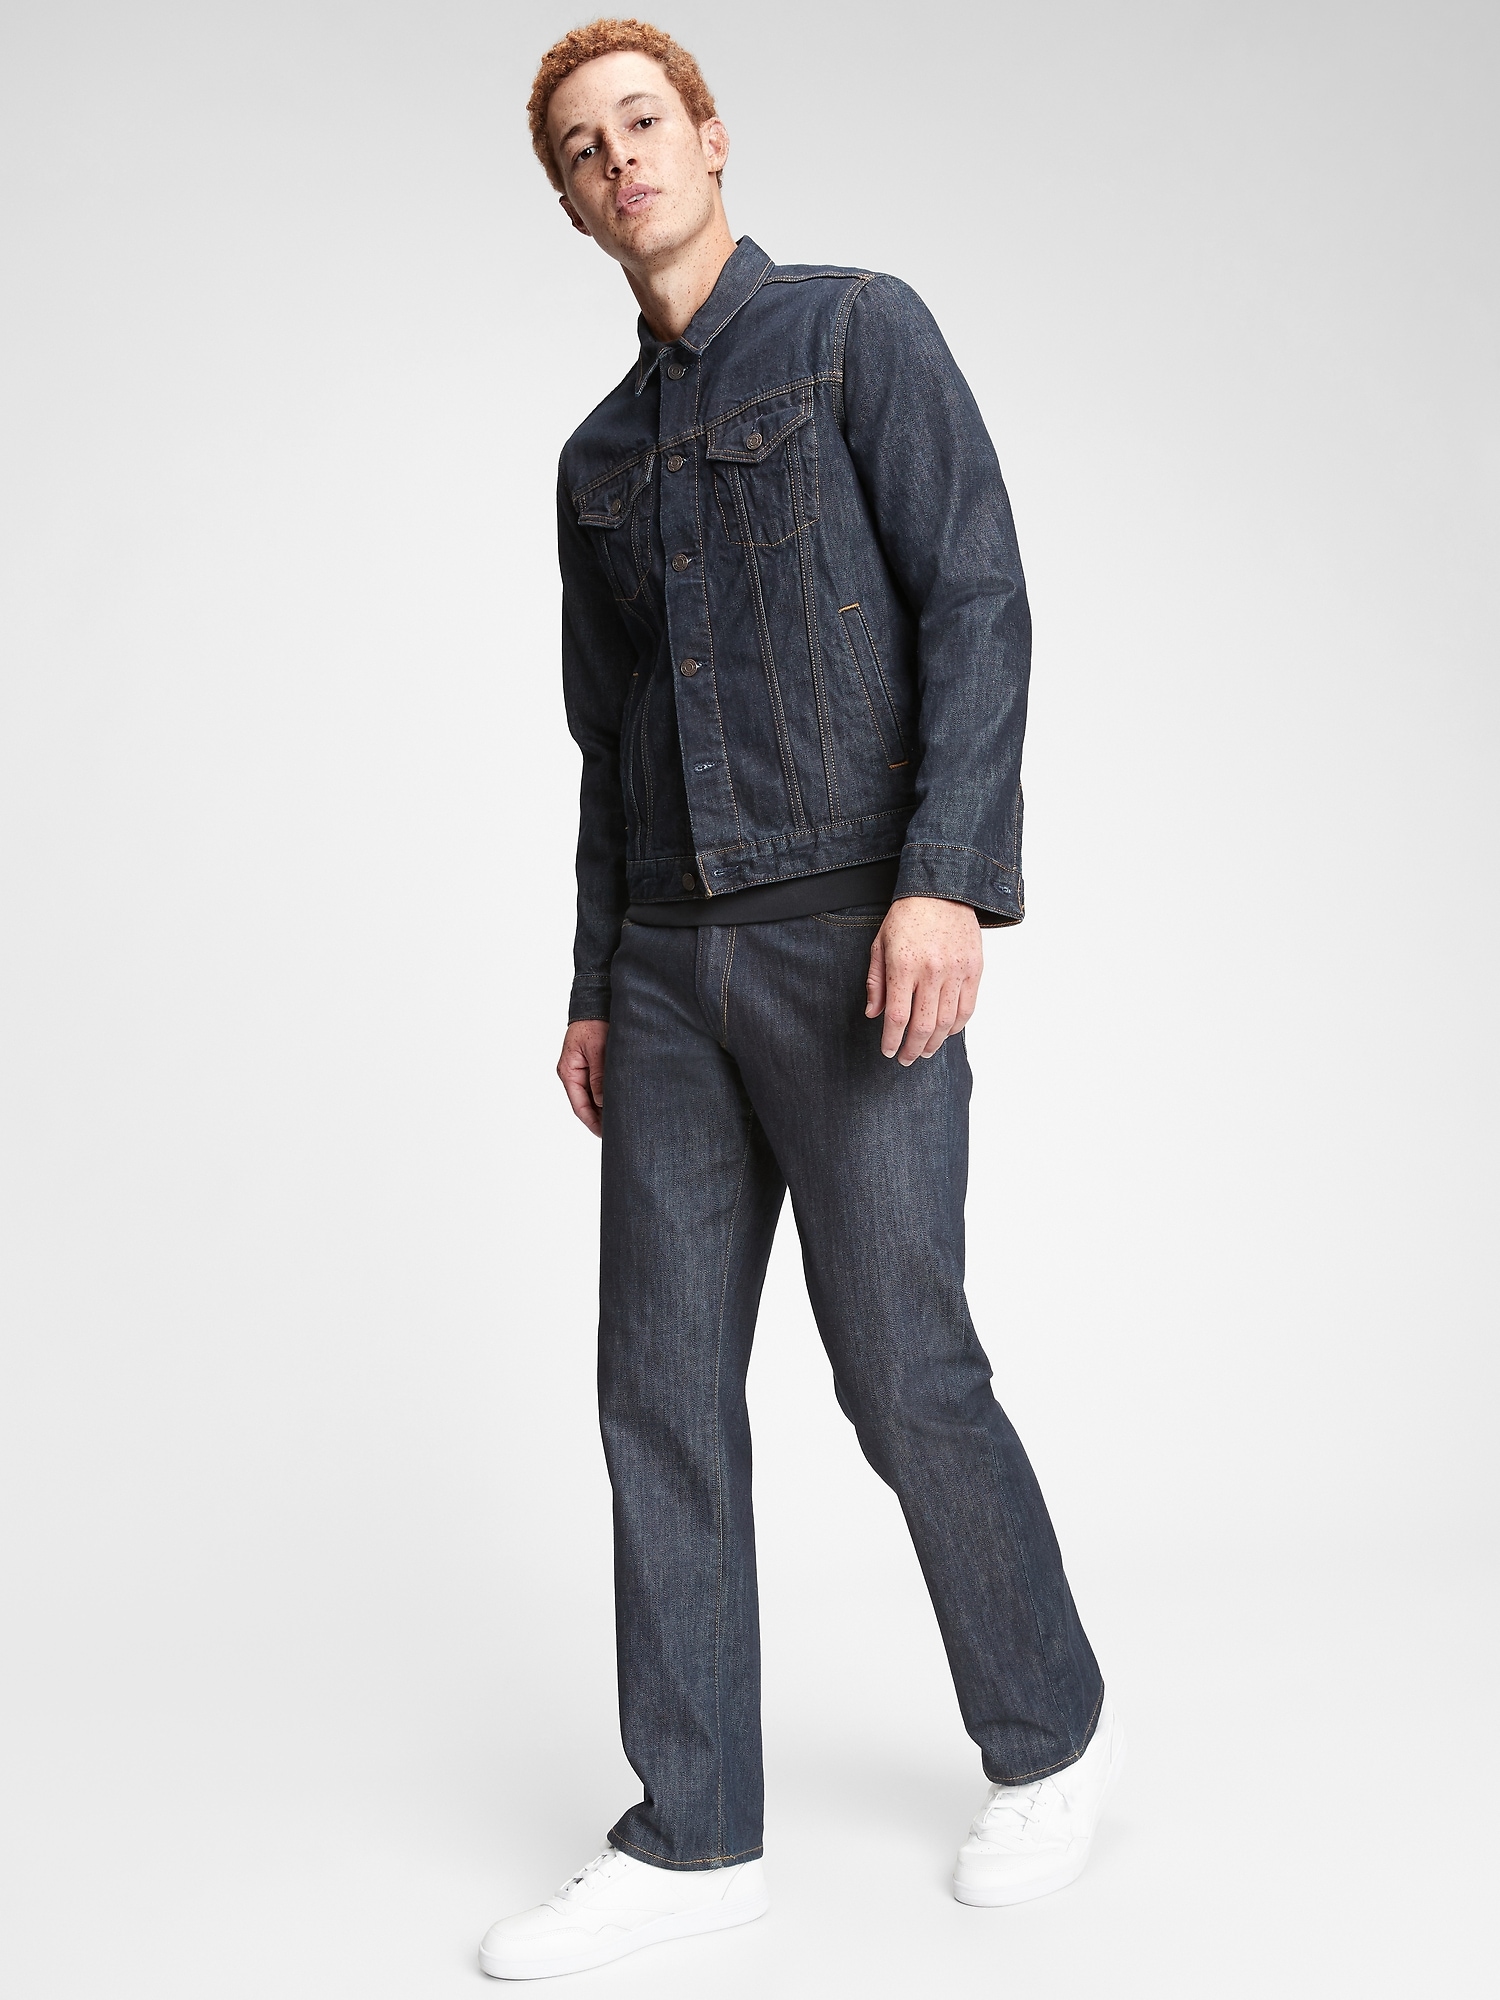 gap blue jeans world standard